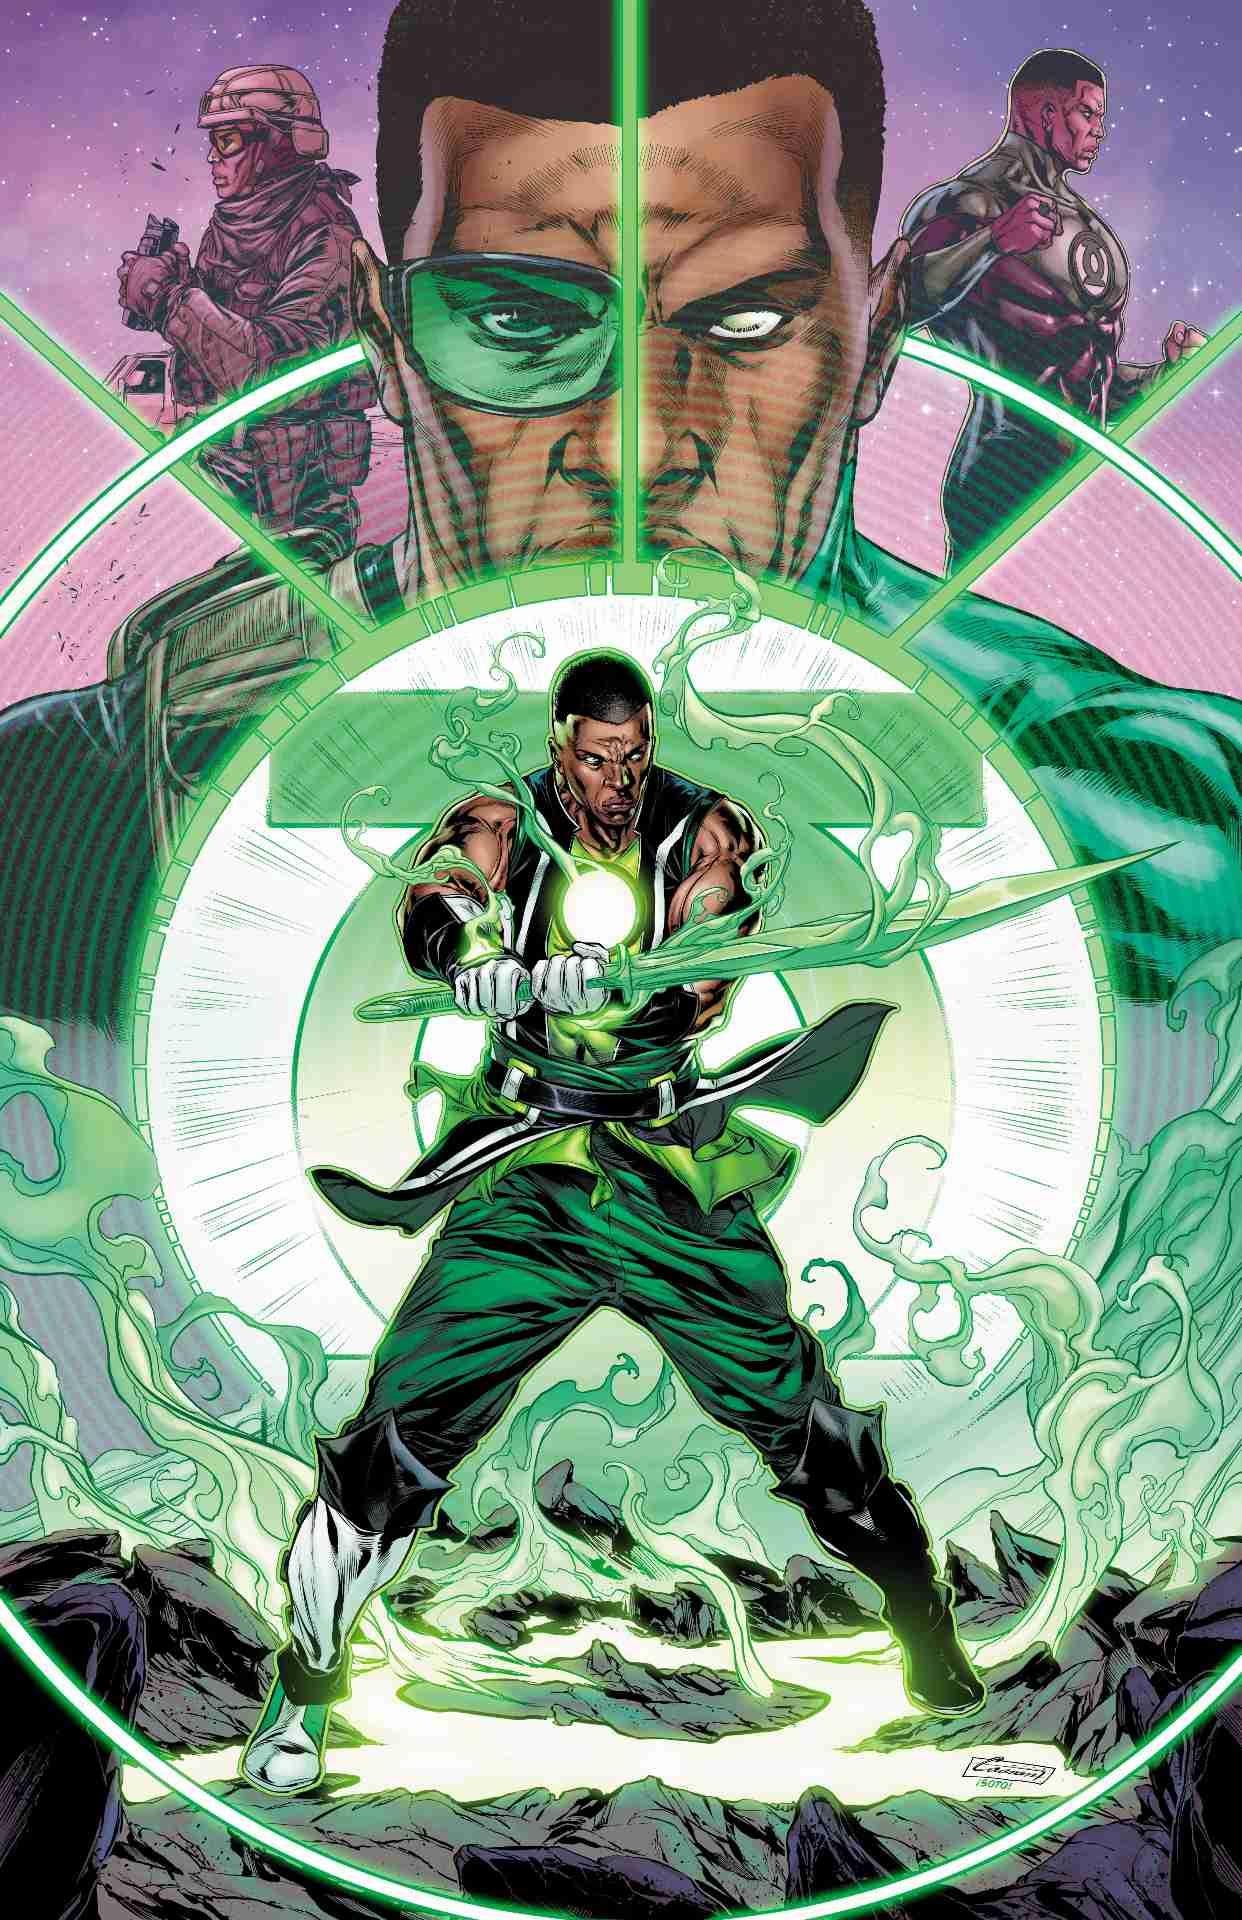 Green Lantern John Stewart Adopts the Emerald Knight Mantle in New DC Comic